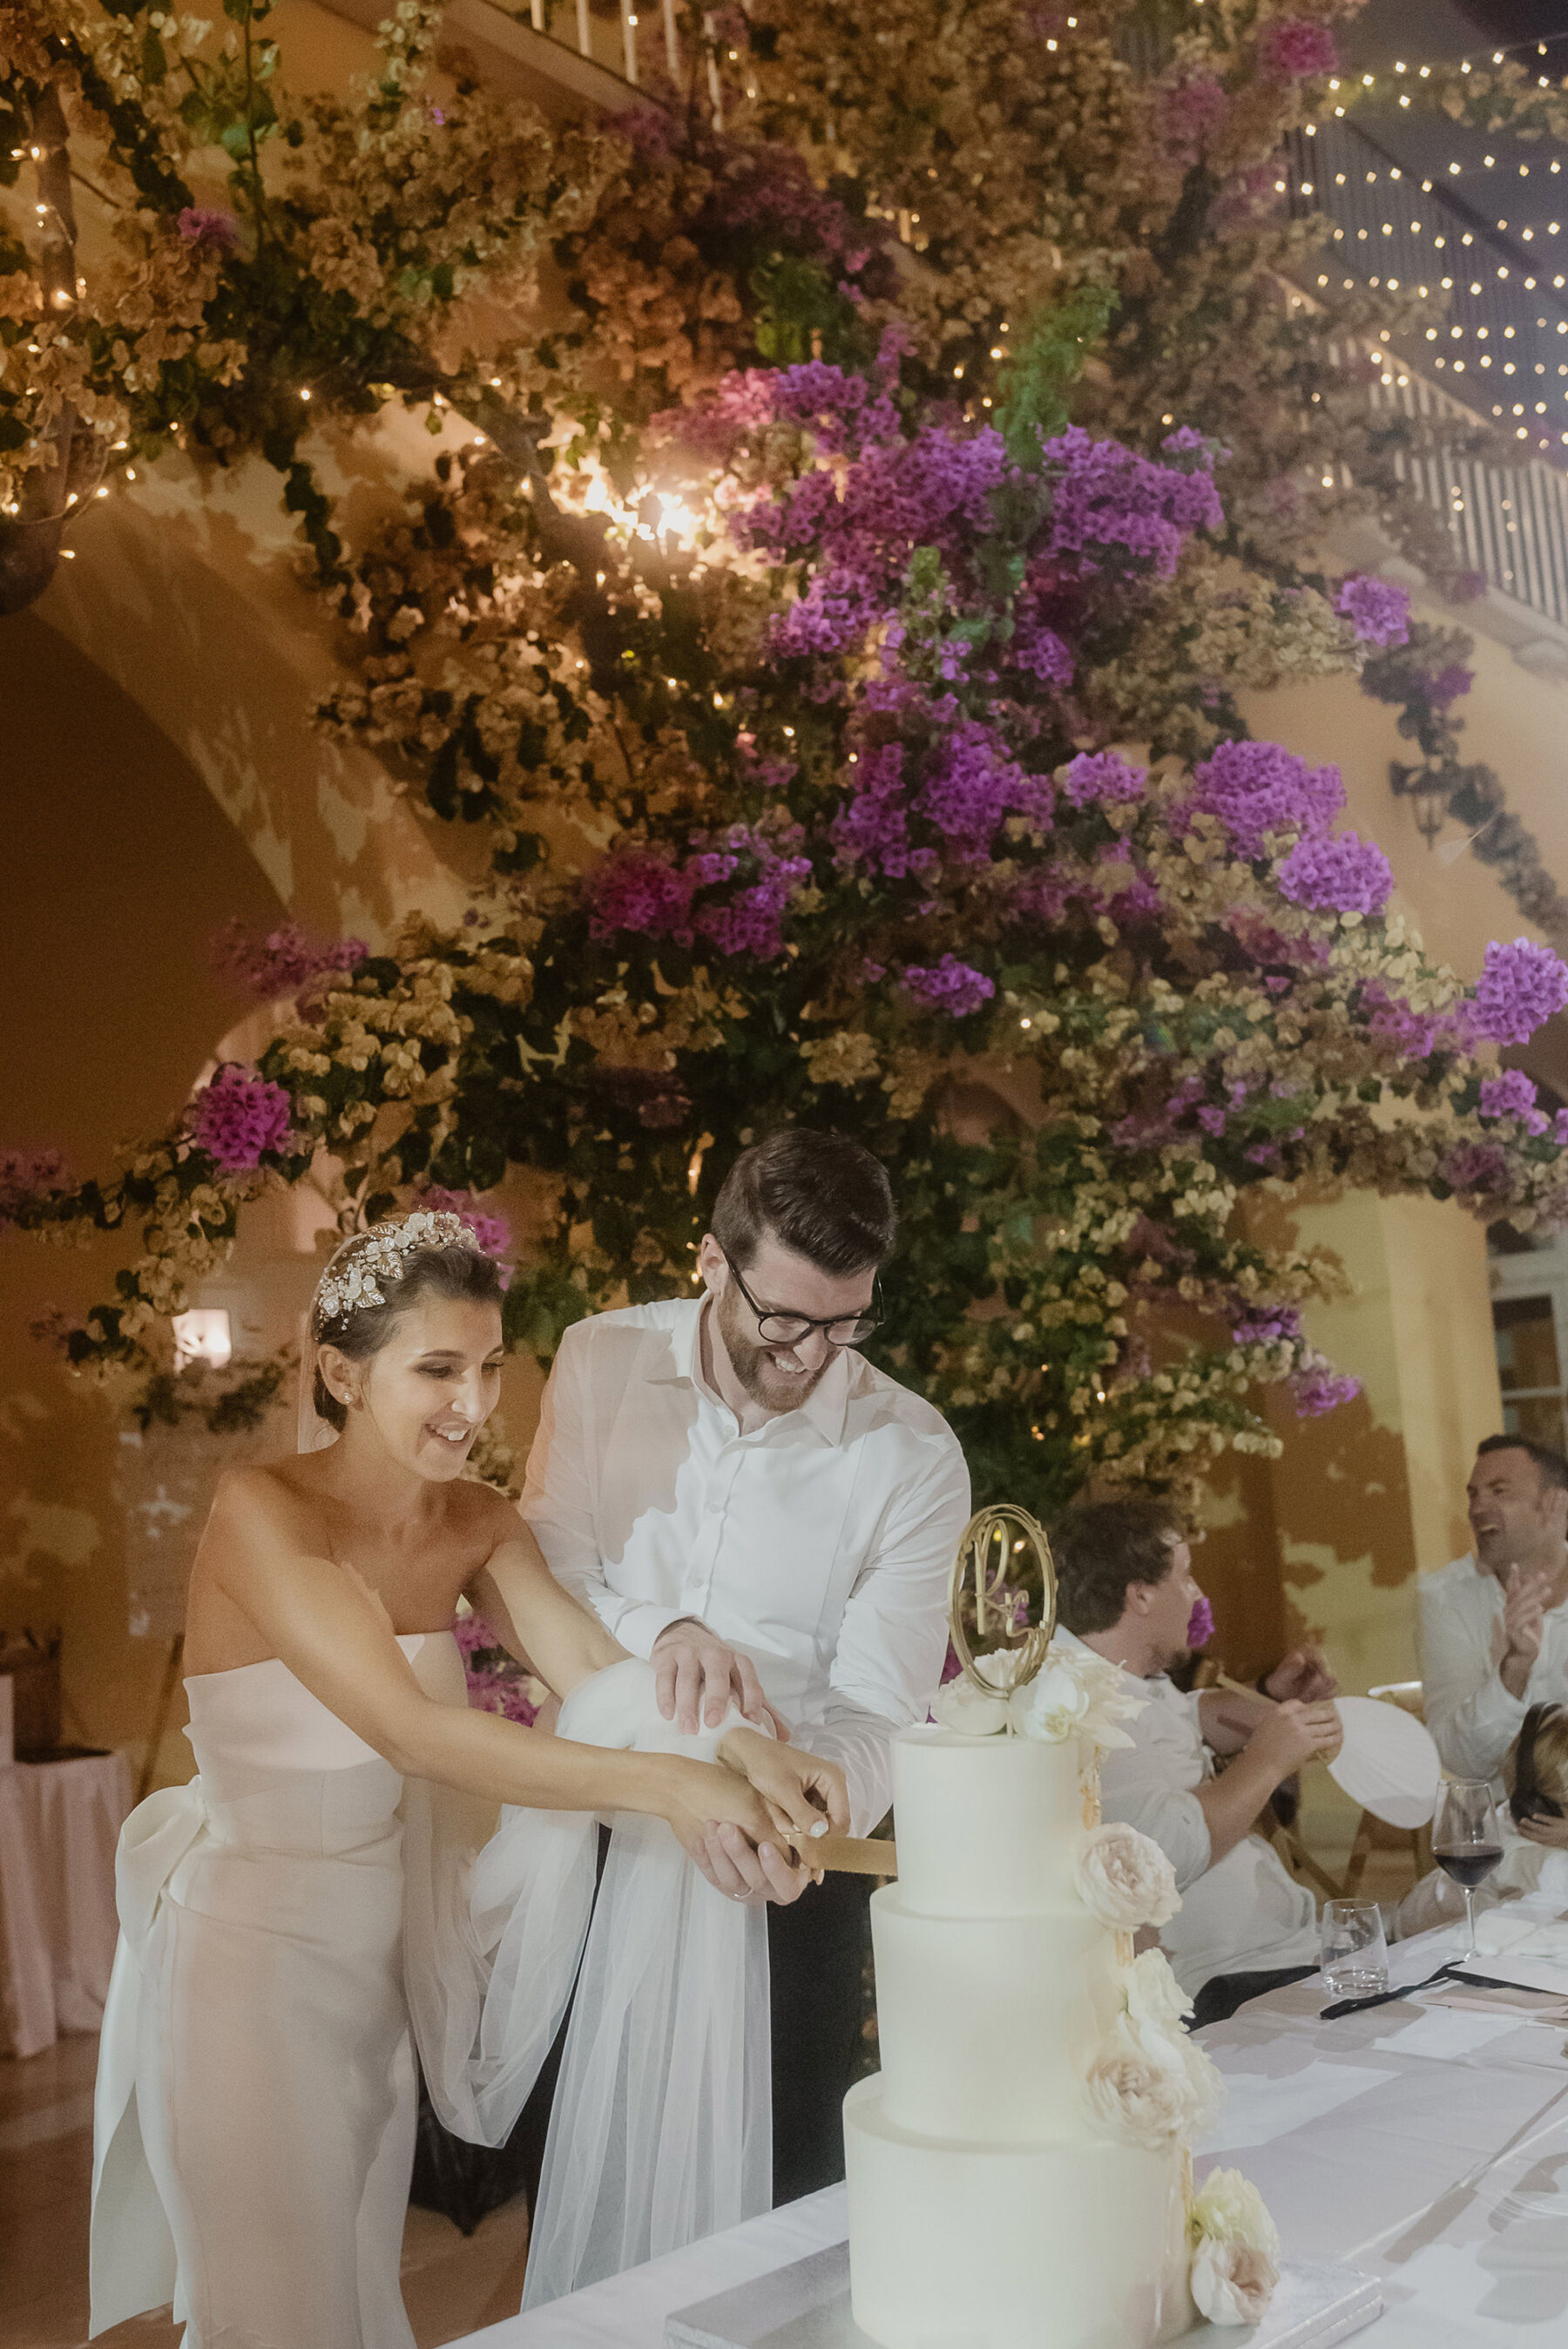 Bride and groom cutting the cake at their wedding ceremony in Croatia. Villa Dalmatia in Split, Croatia